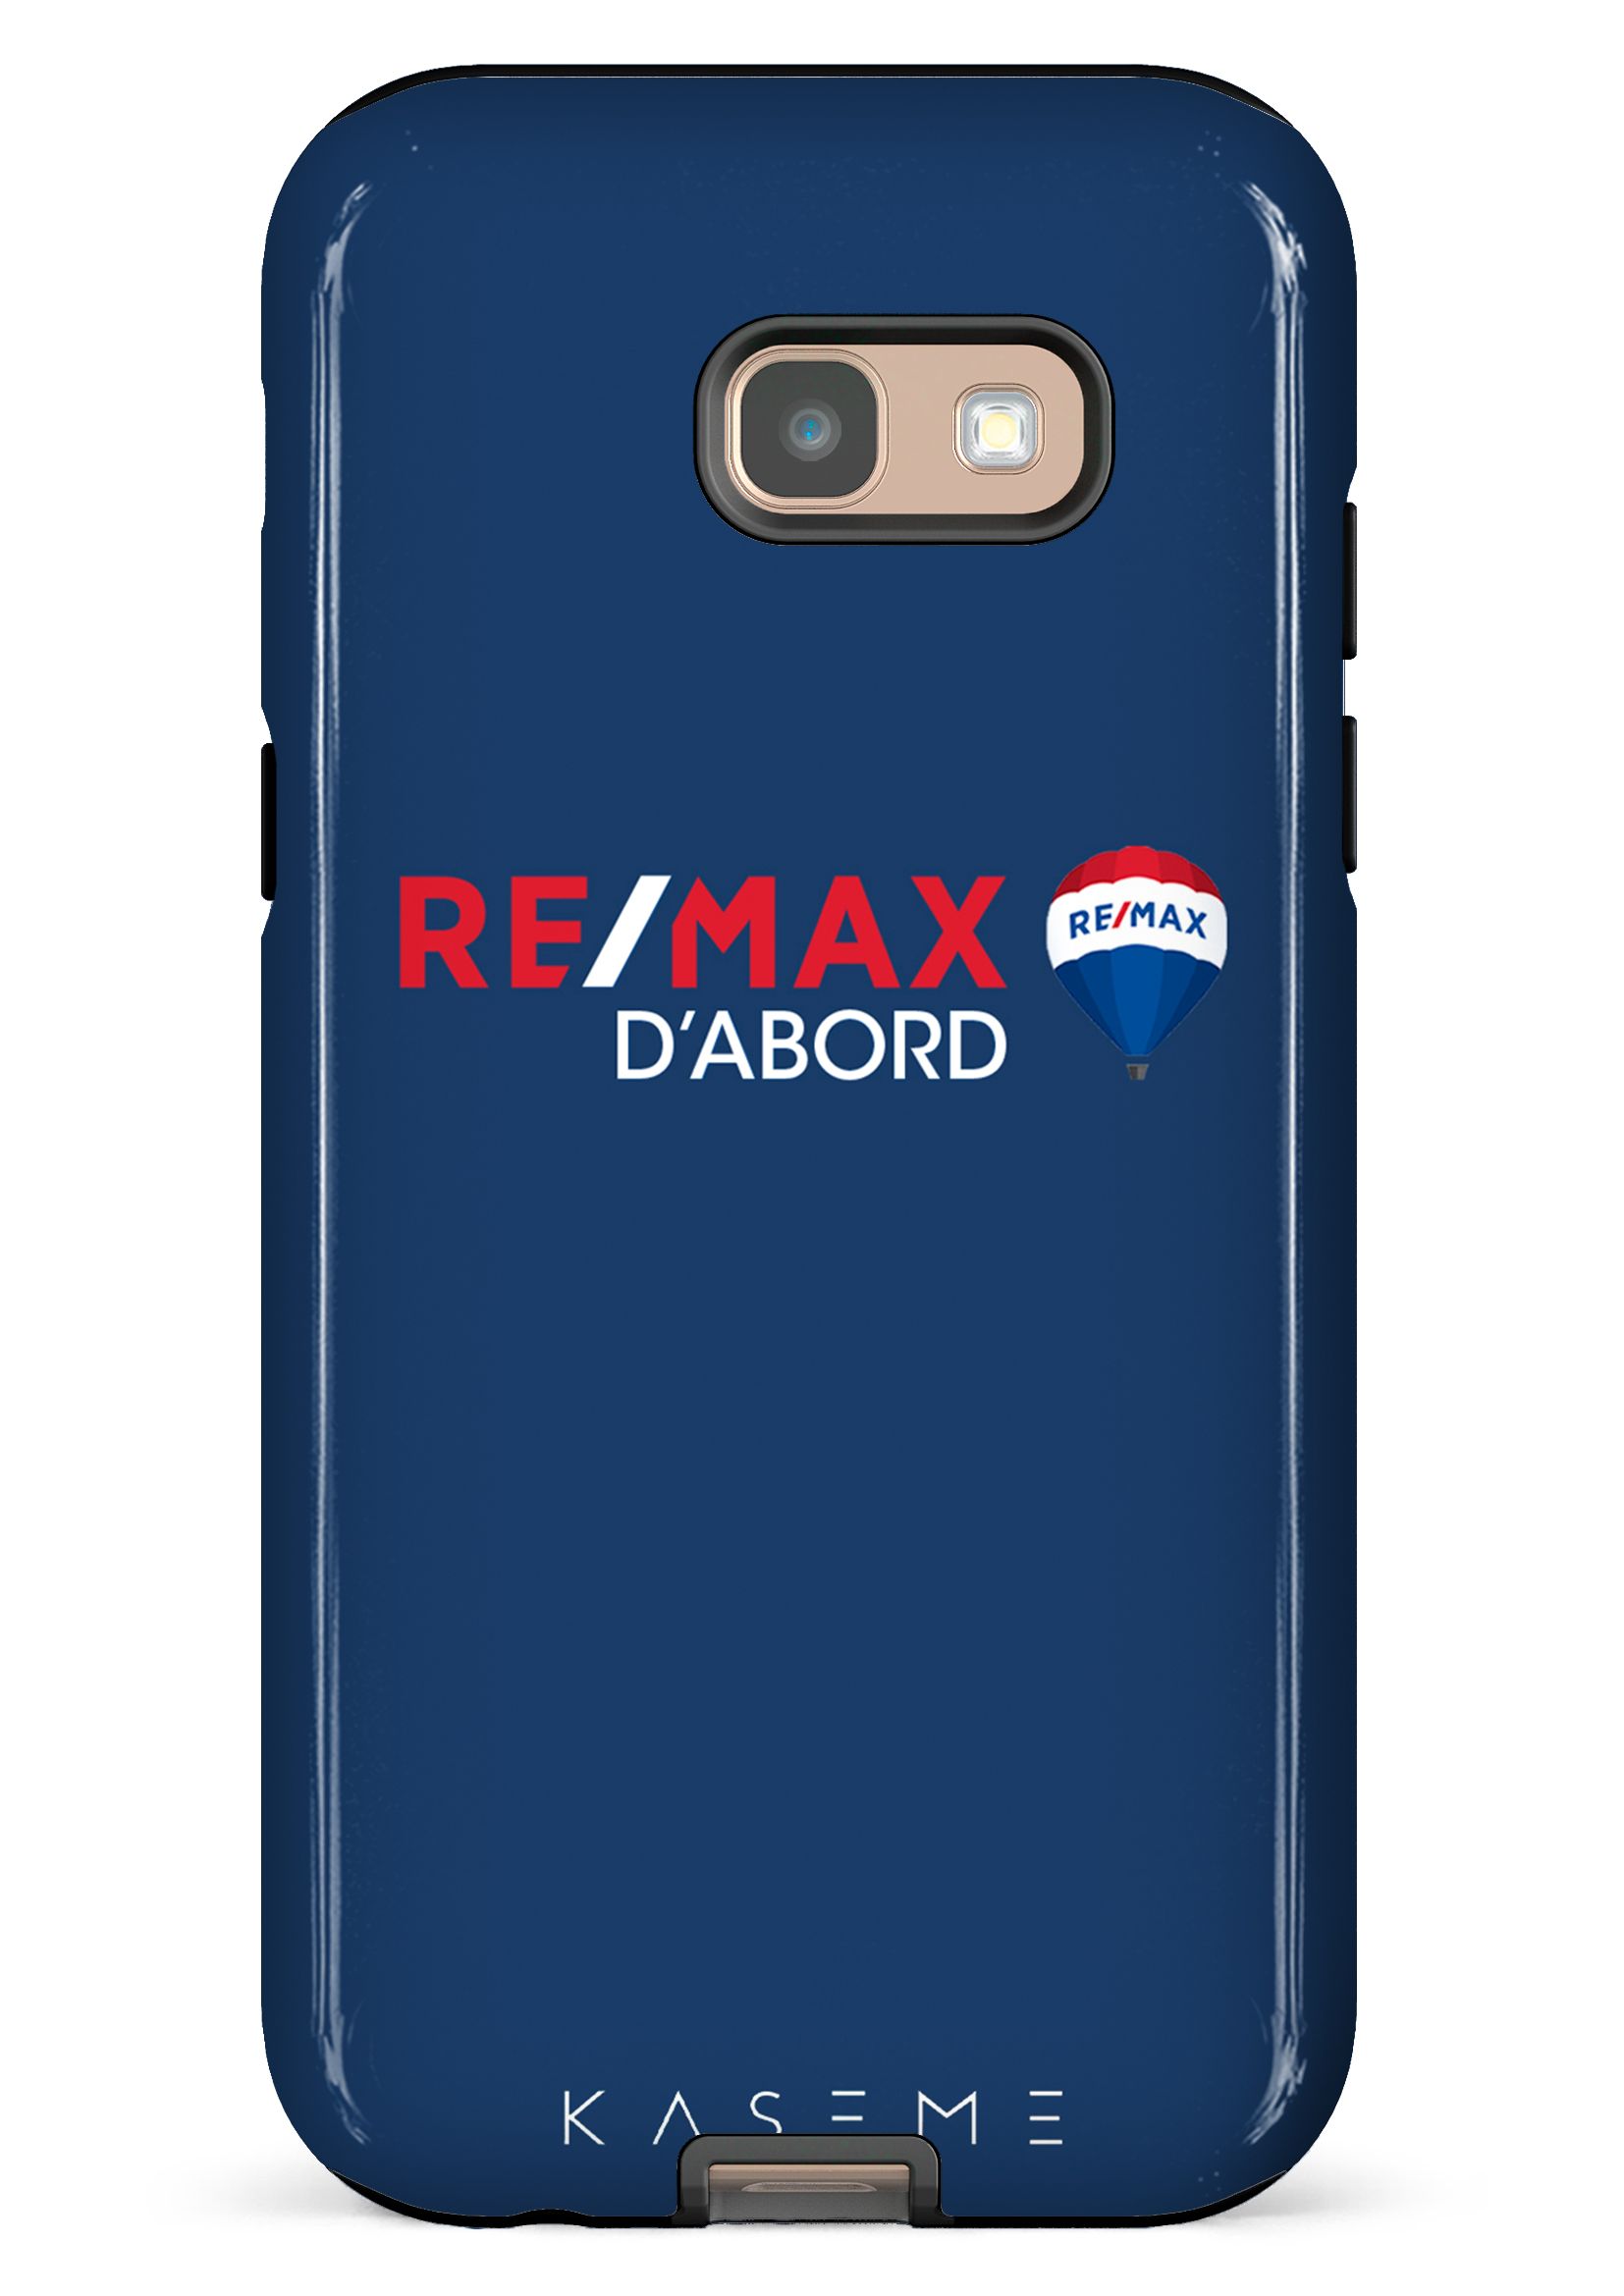 Remax D'abord Bleu - Galaxy A5 (2017)